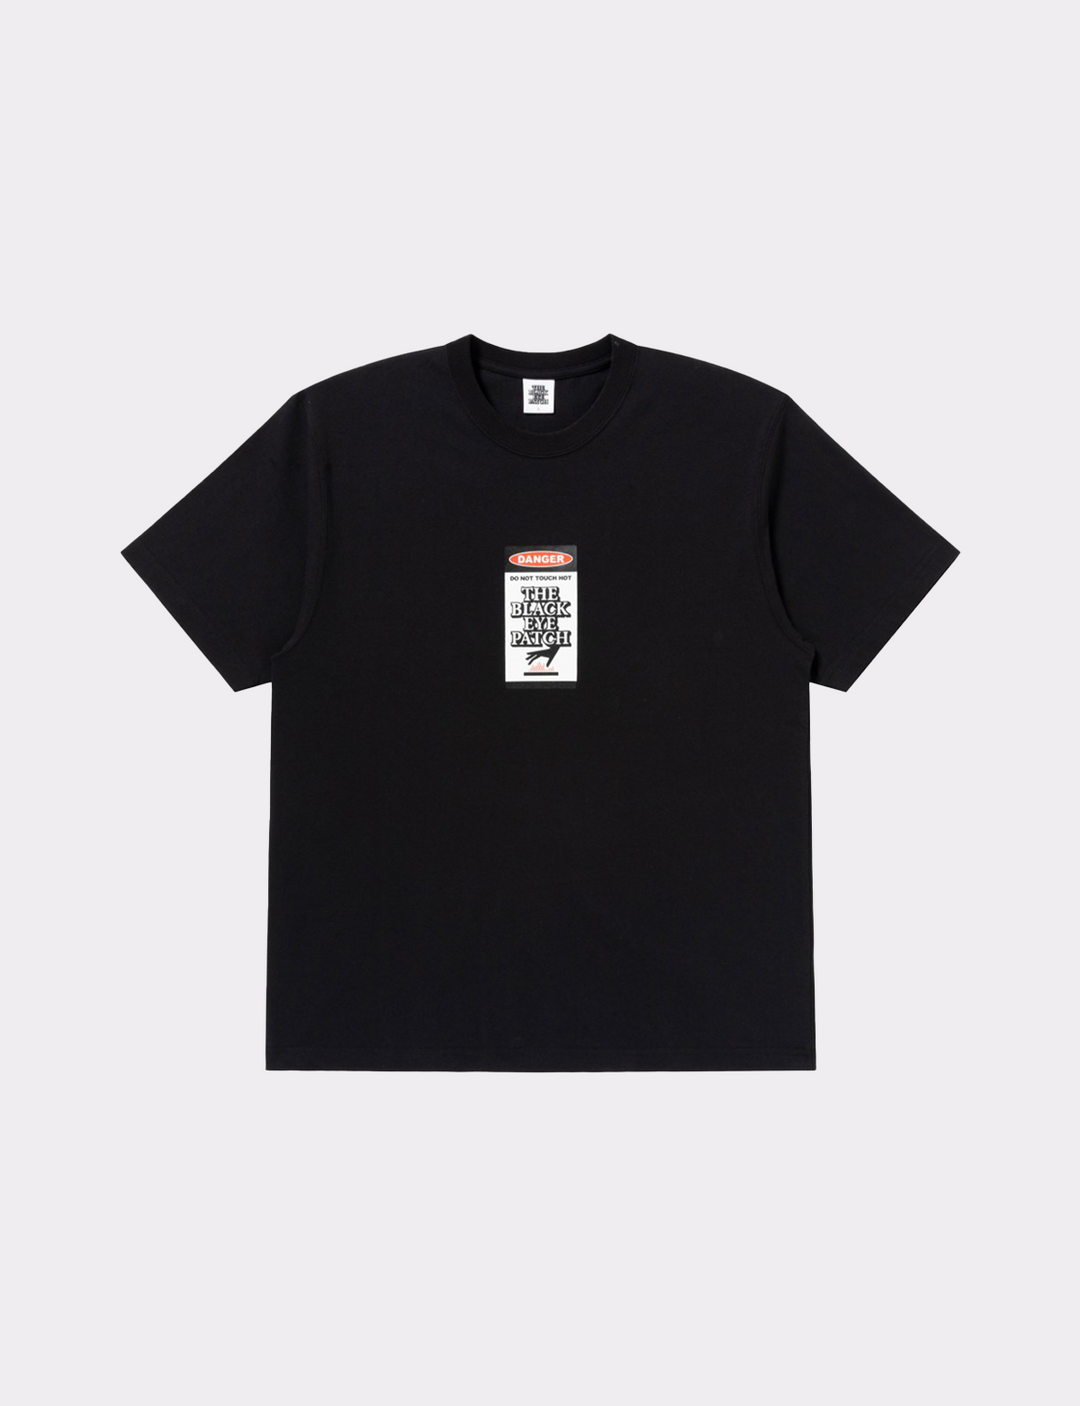 BlackEyePatch DANGER HOT LABEL TEE Lサイズ - Tシャツ/カットソー